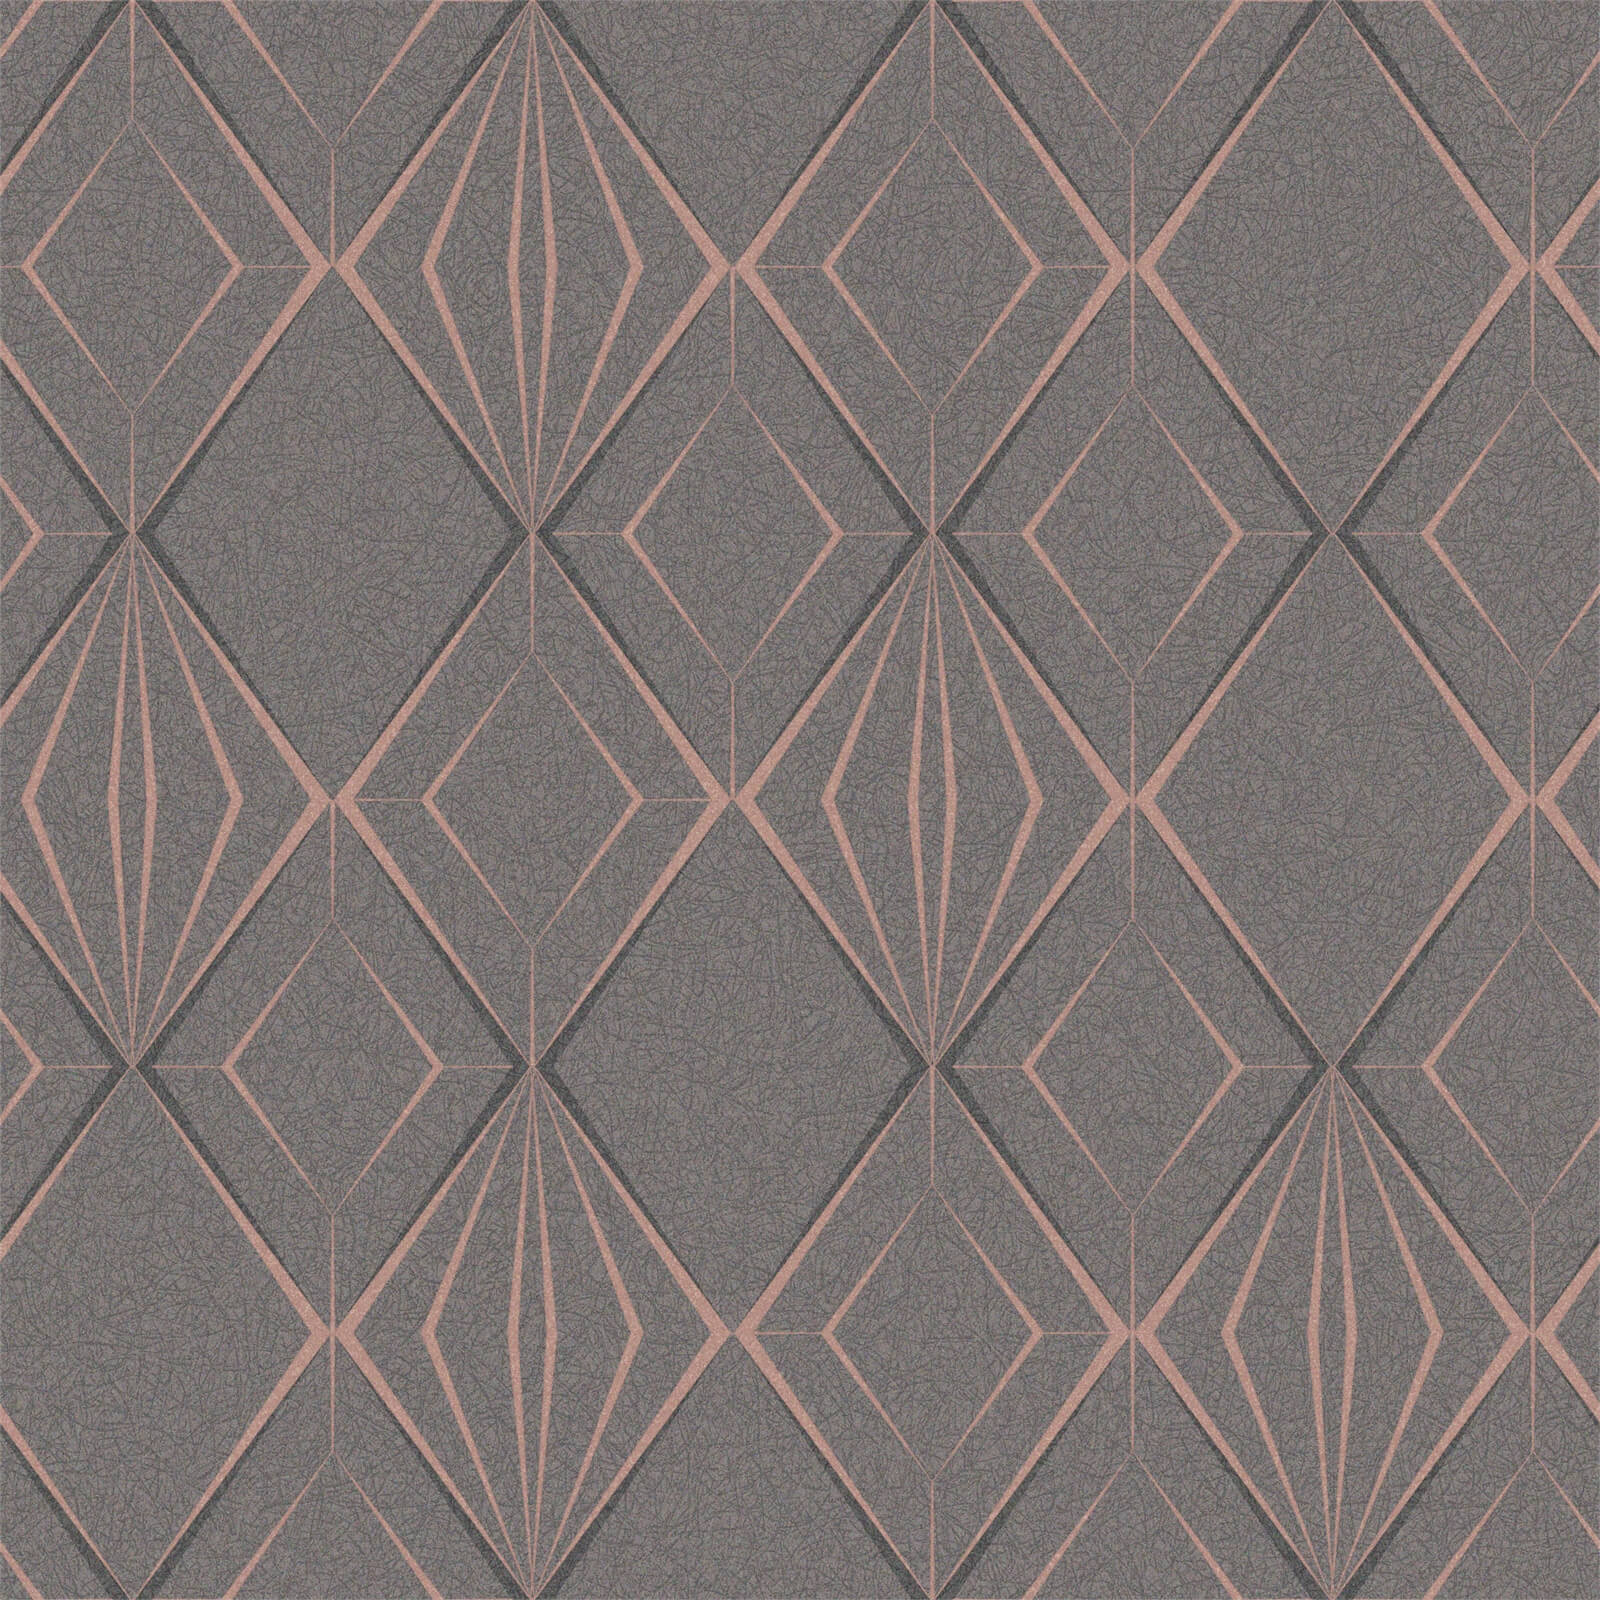 Holden Decor Antares Geometric Textured Metallic Glitter Charocal and Rose Gold Wallpaper